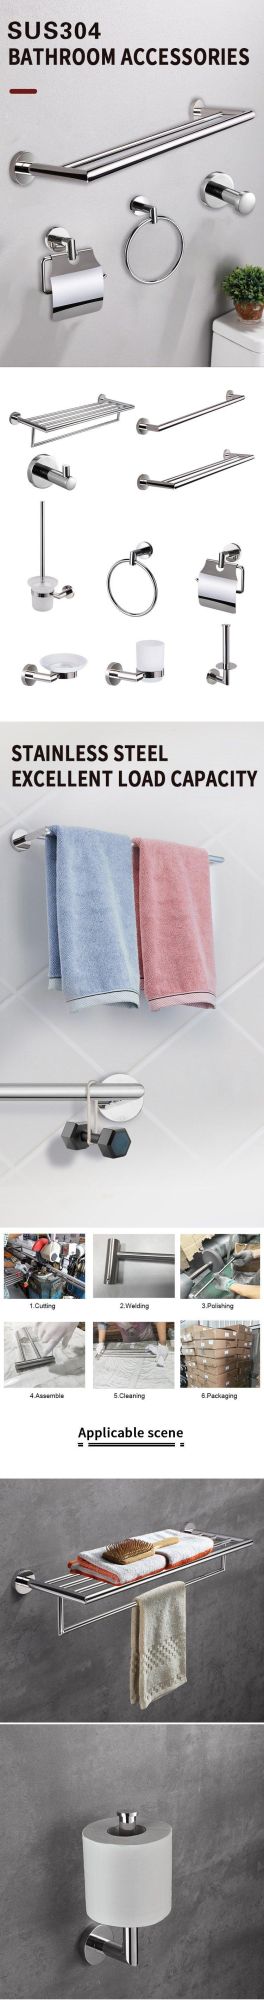 Wall Mounted Stainless Steel Bathroom Accessories Set Towel Bar Towel Holder Robe Hook Toilet Paper Holder